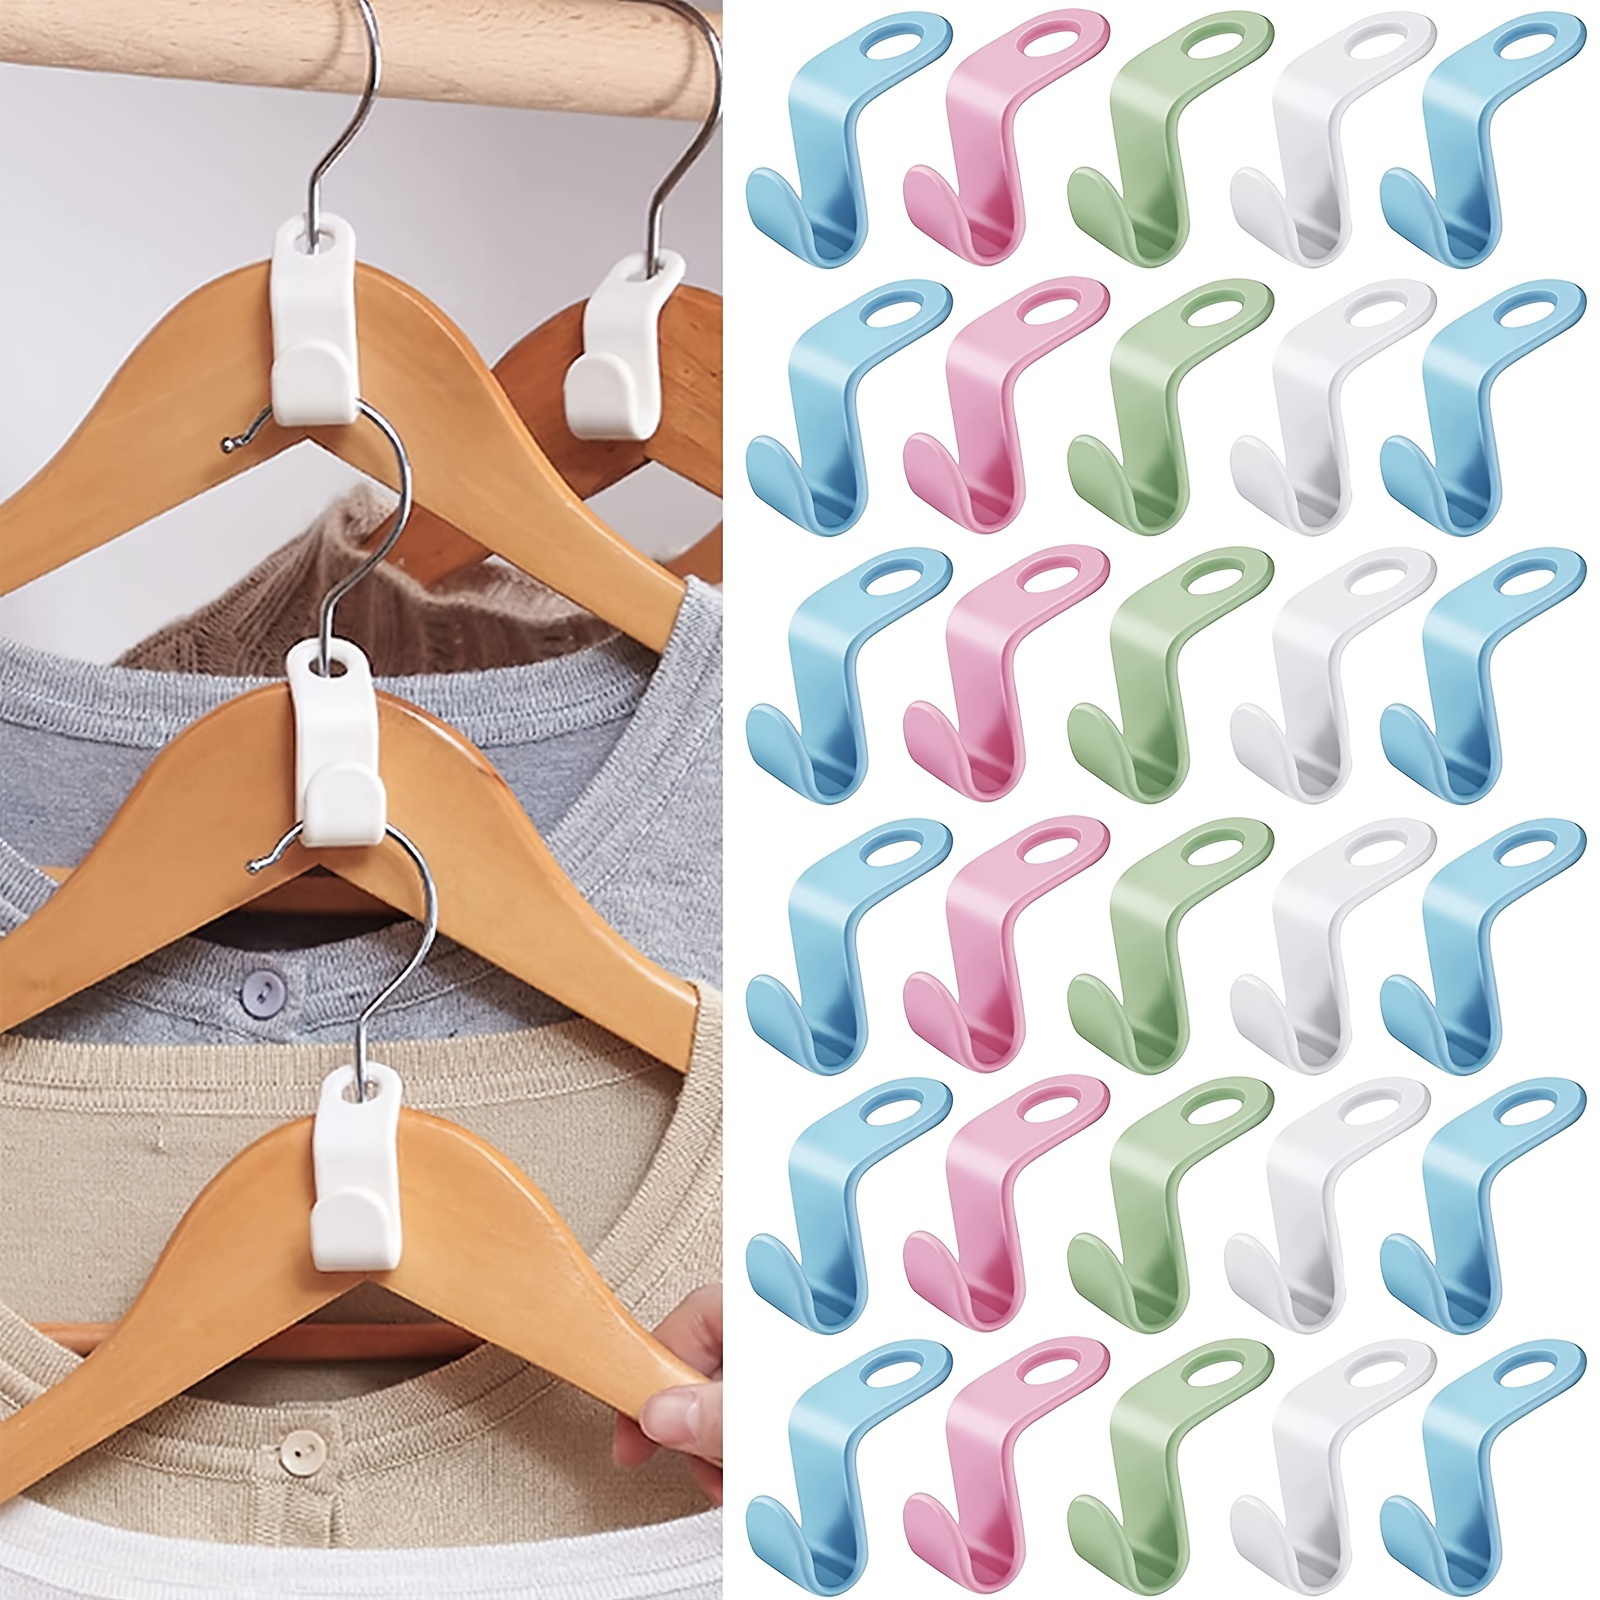 Clothes Hanger Connector Hooks, 60Pcs - ABS Hanger Extender Hooks